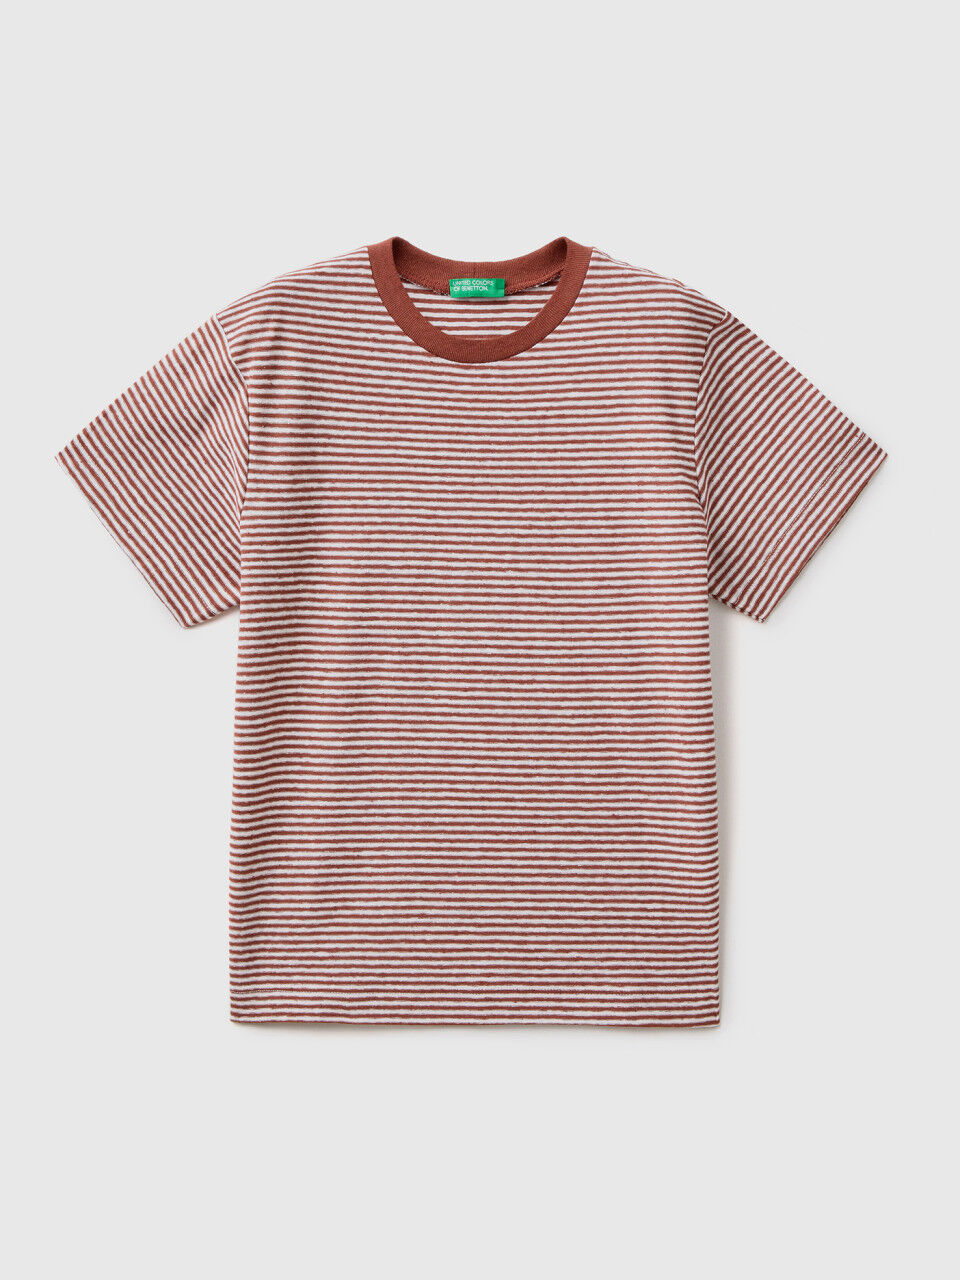 Camiseta de lino mixto de rayas